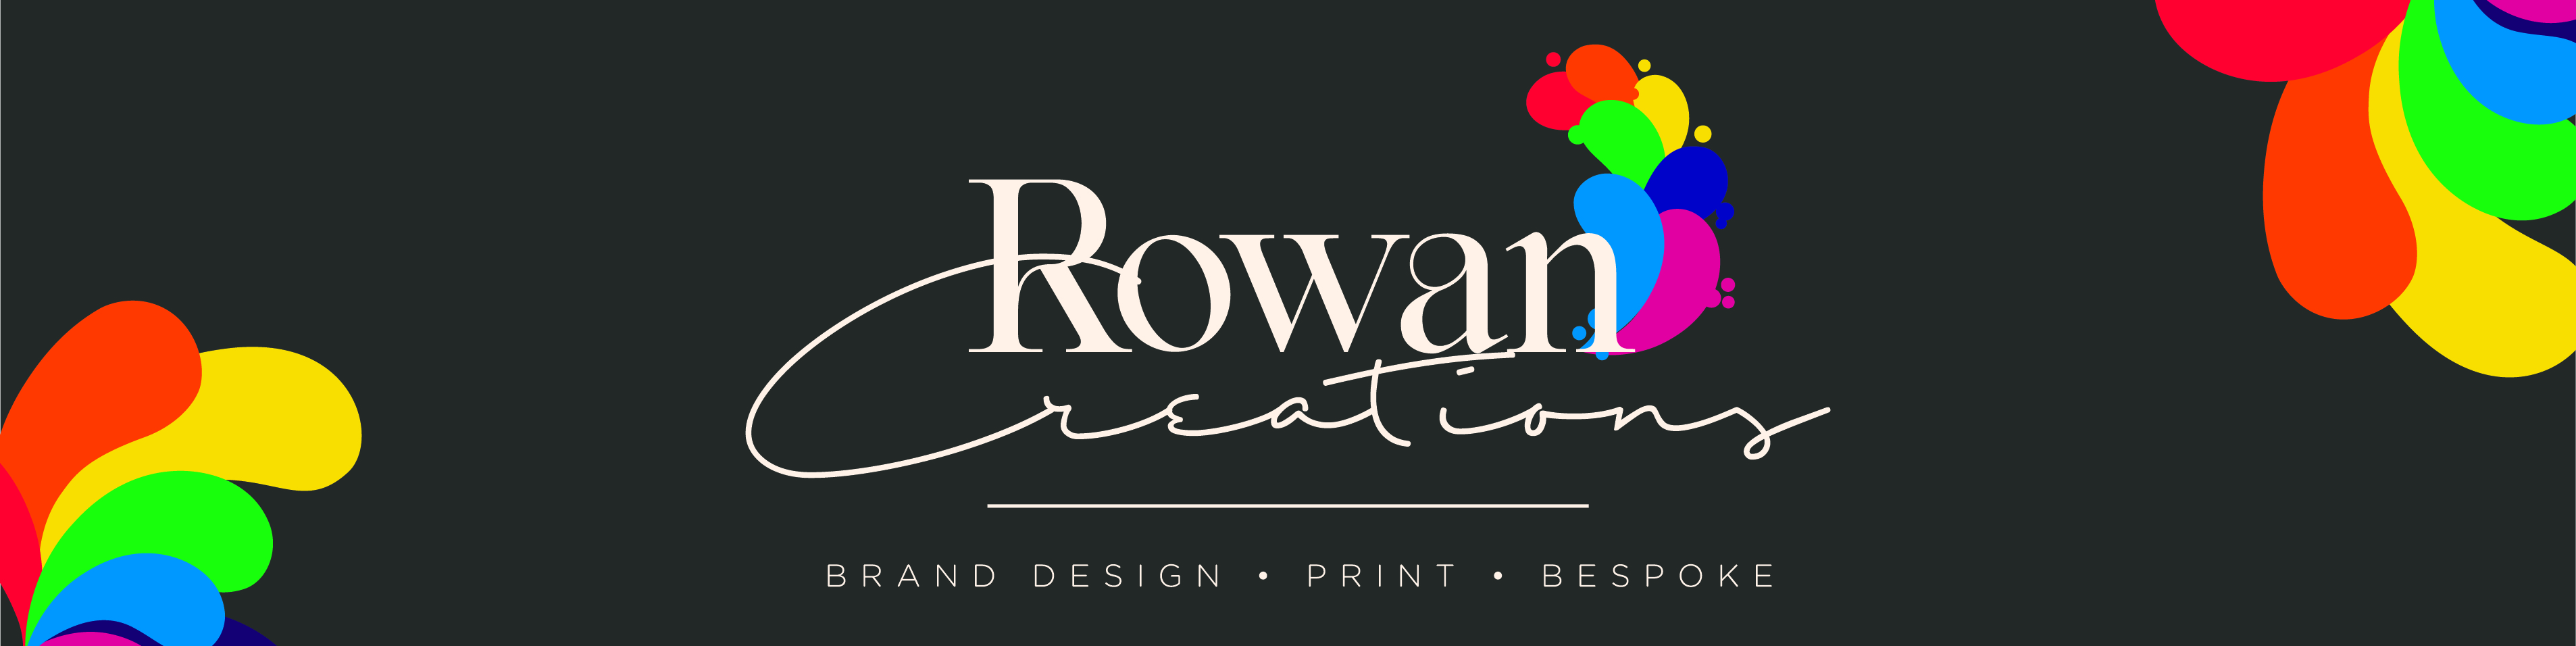 Rowan Creations - DESIGN PRINT BESPOKE